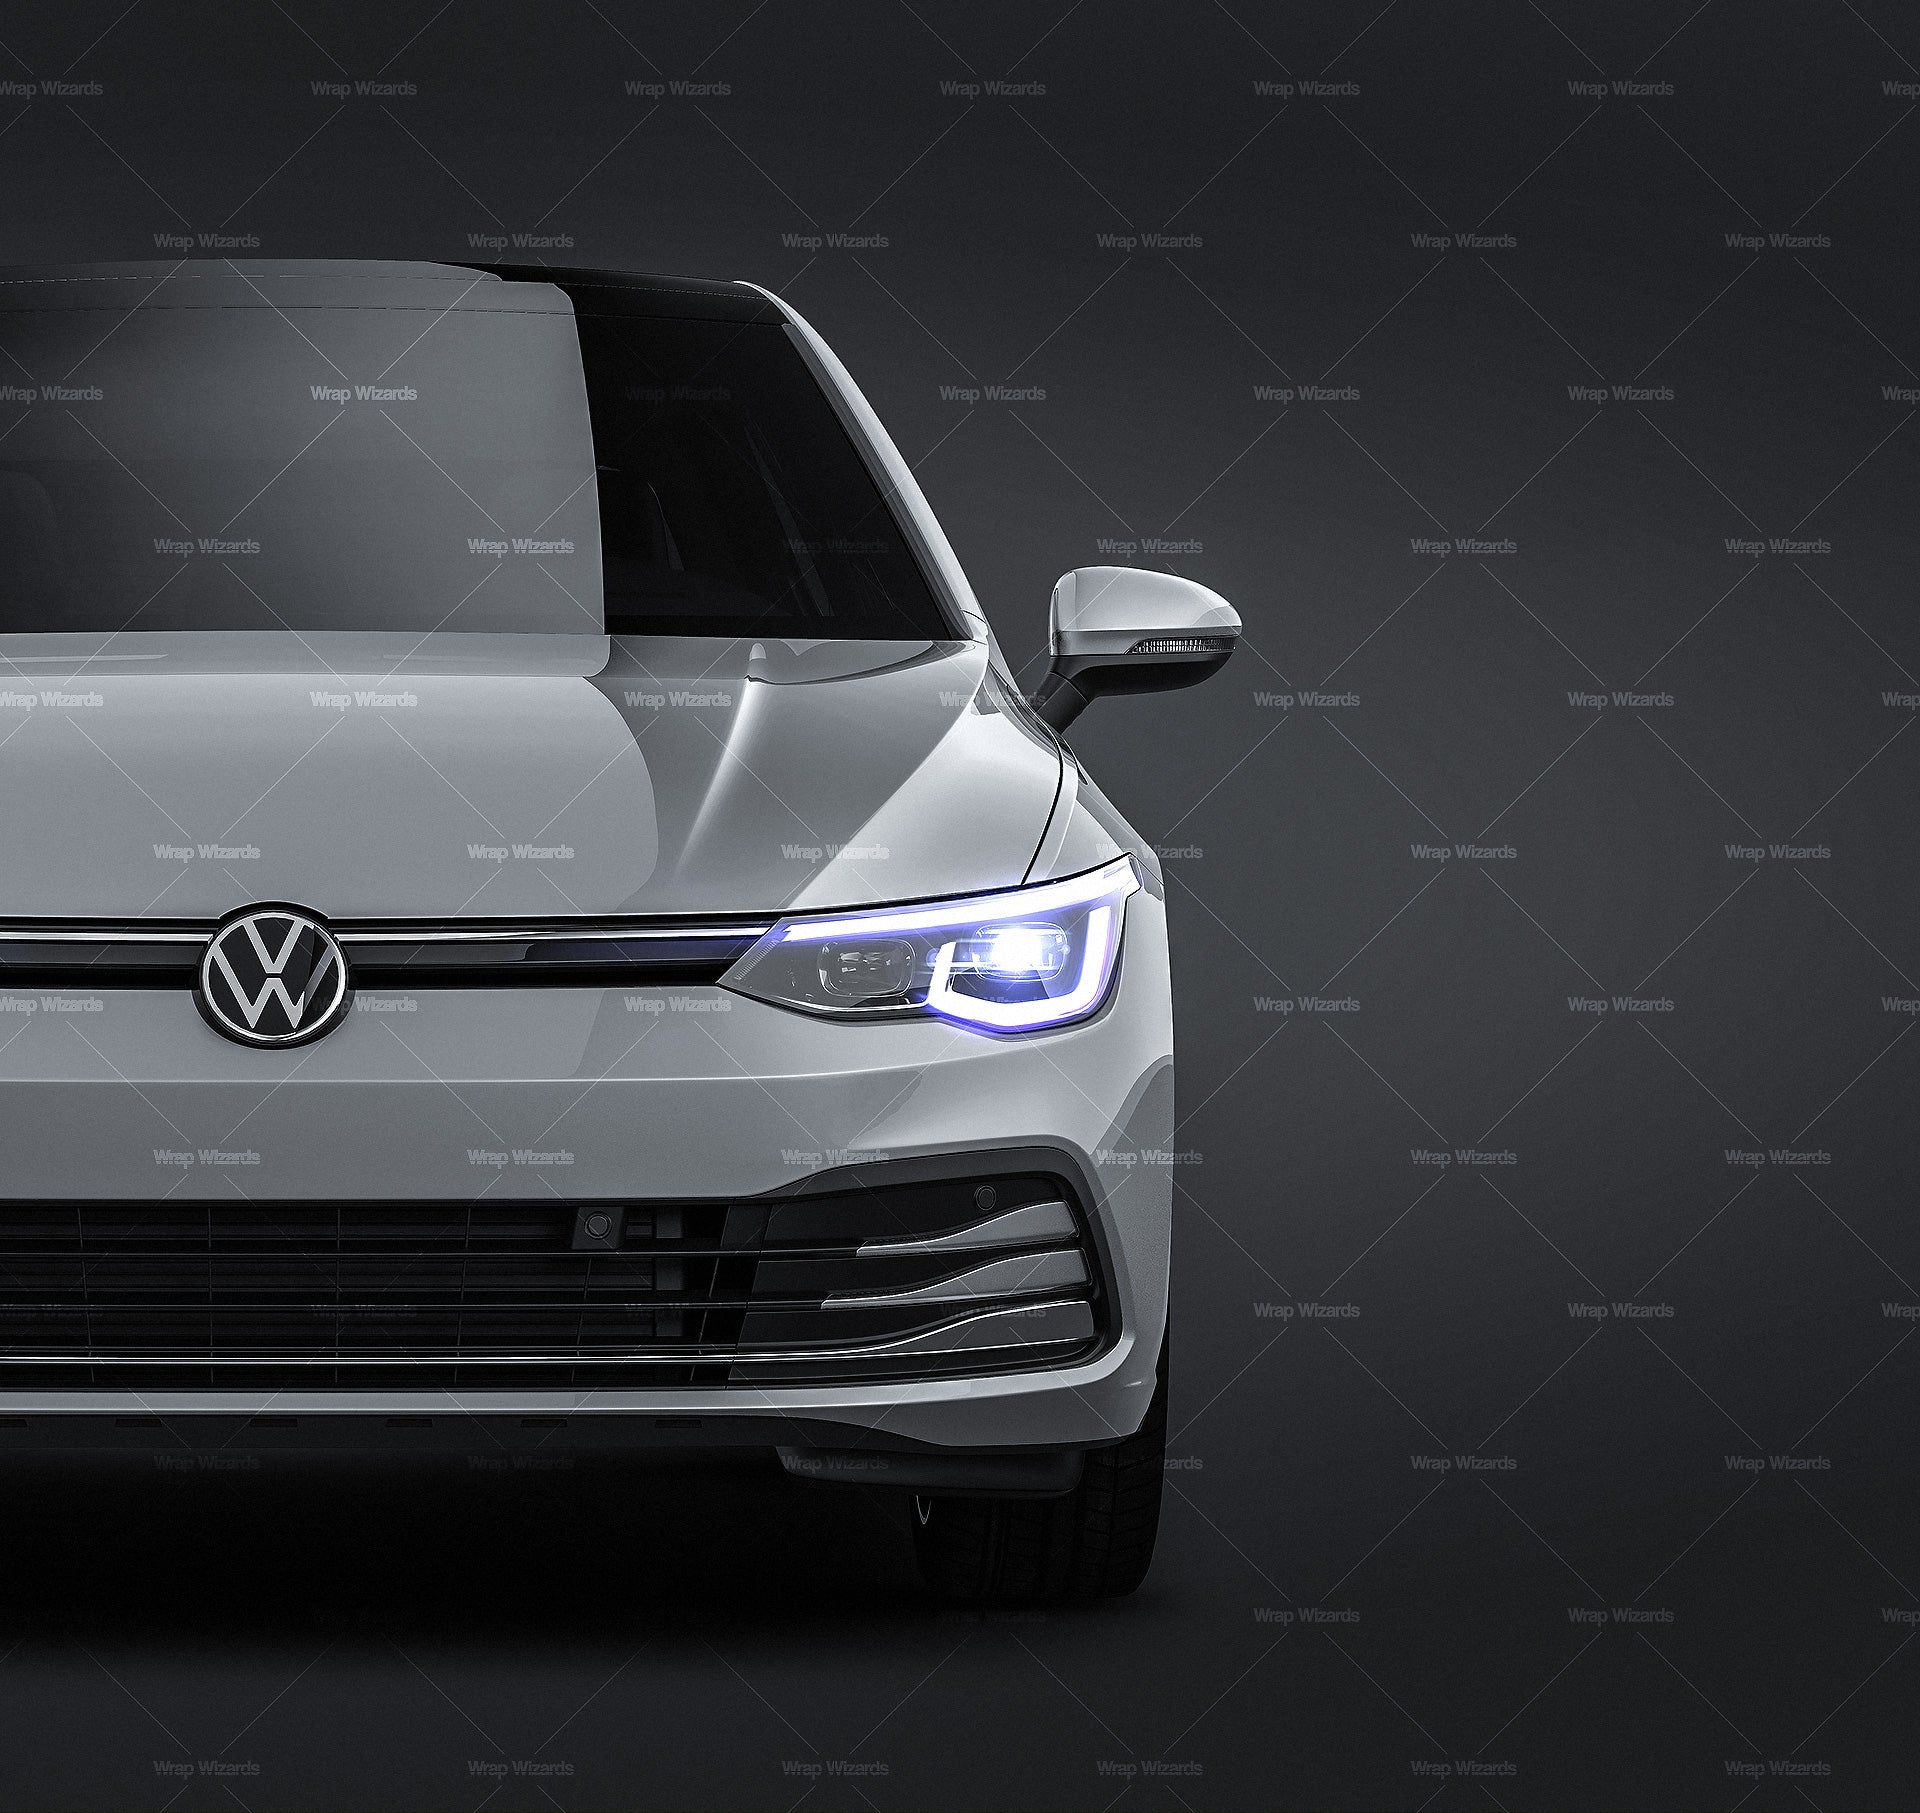 Volkswagen Golf MK8 5-door 2020 glossy finish - all sides Car Mockup Template.psd